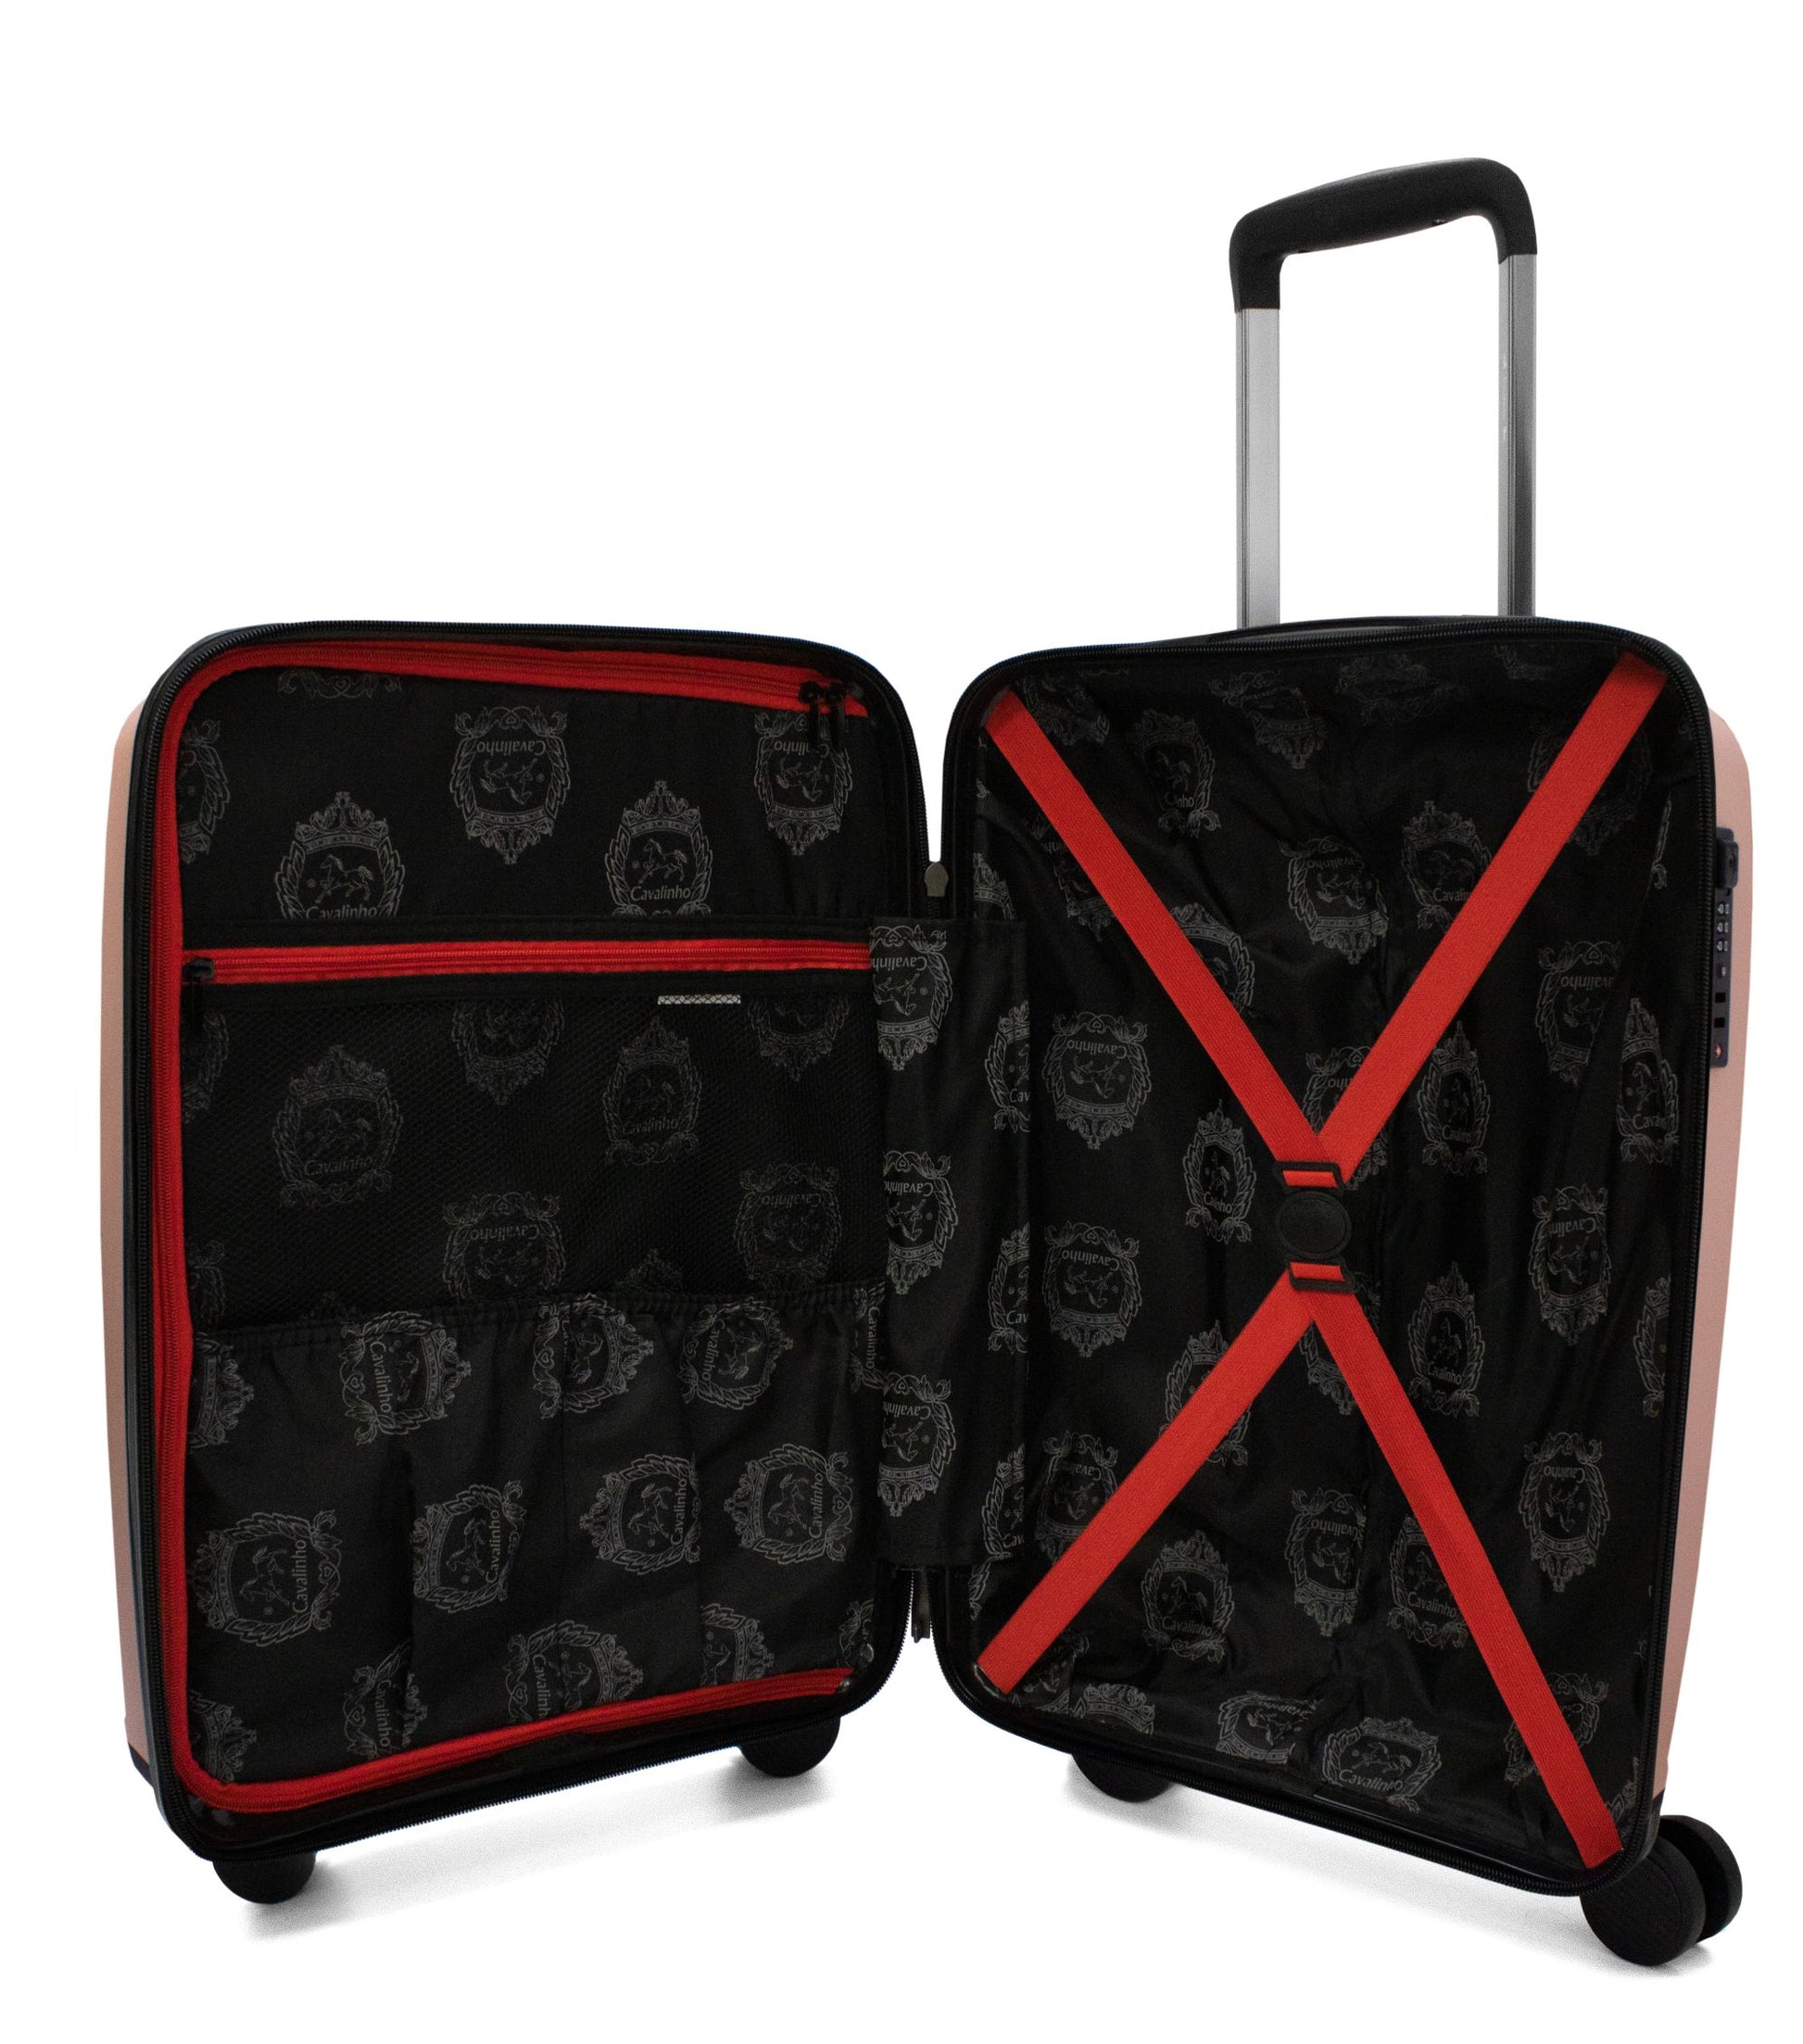 Cavalinho Colorful Carry-on Hardside Luggage (19") - 19 inch Salmon - 68020004.11.19_4